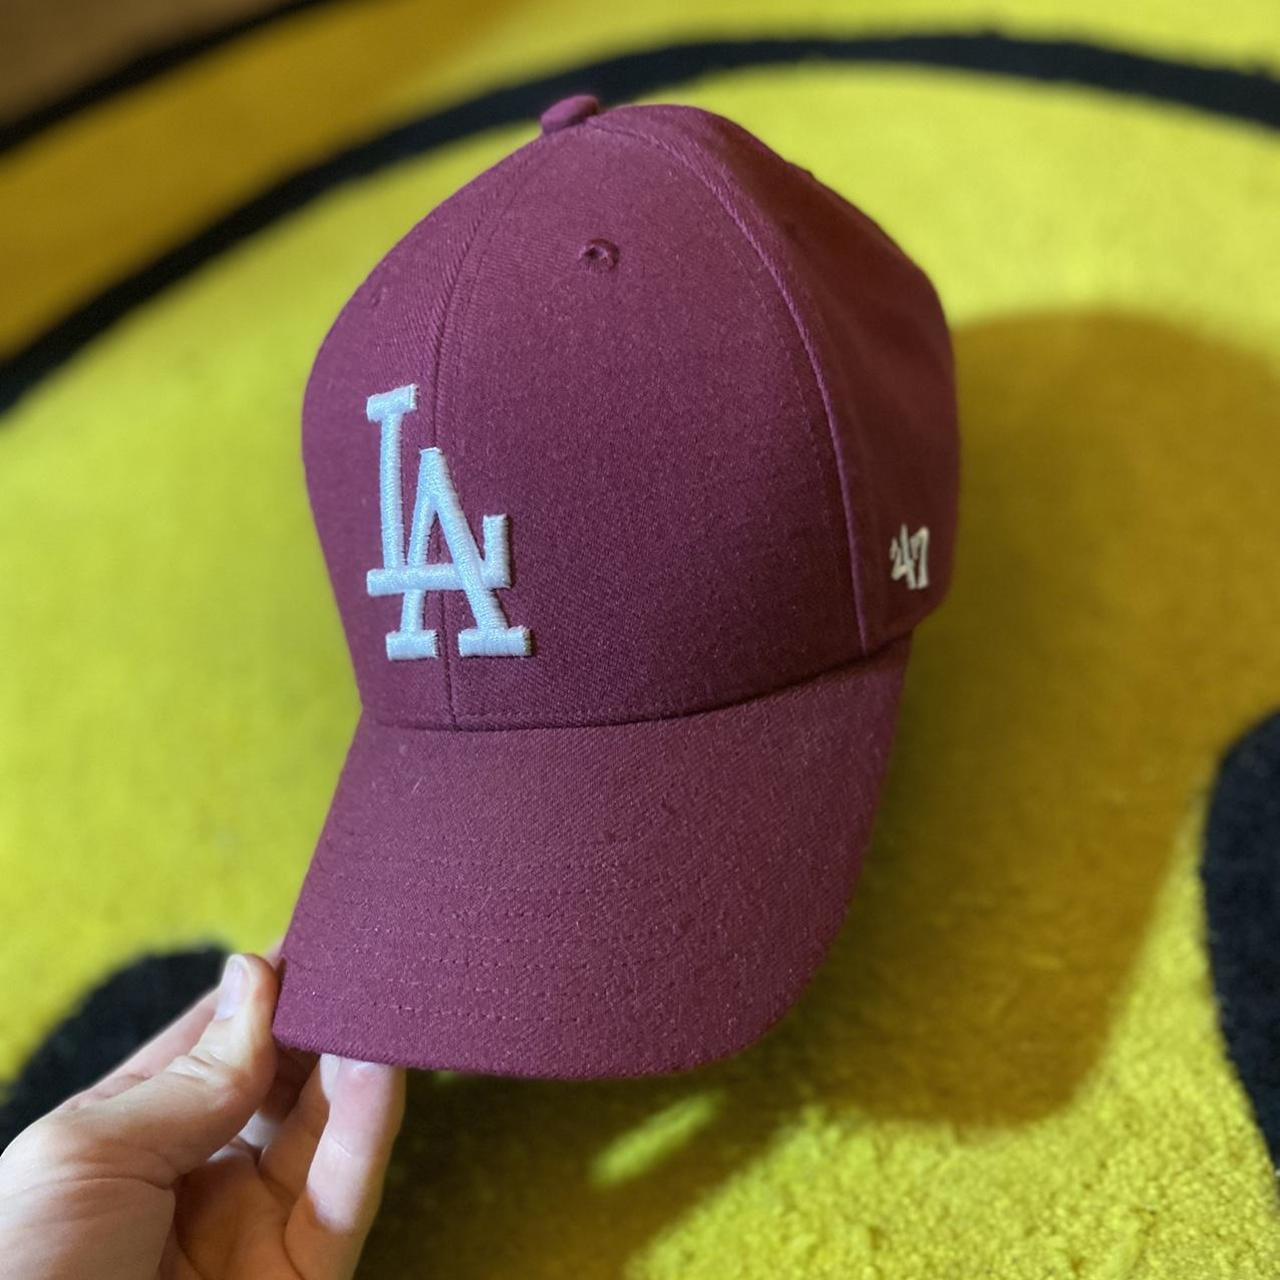 Los Angeles Dodgers 47 Brand Hat Strapback Cap used